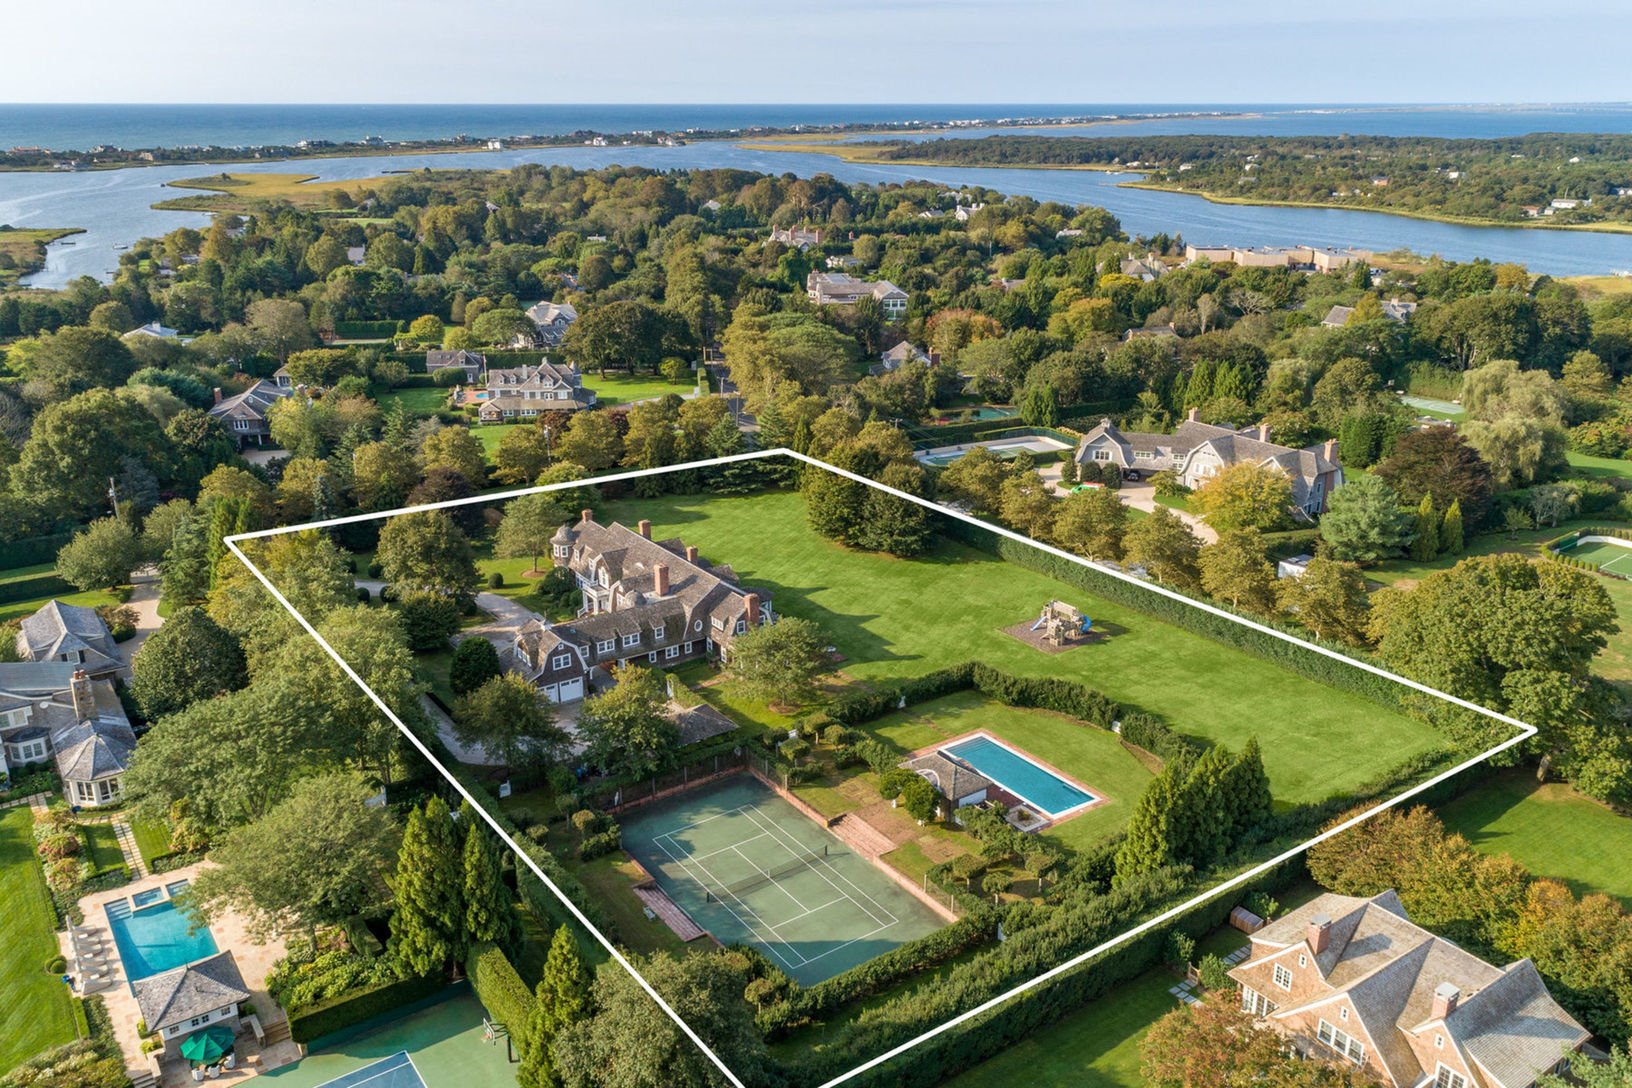 Vista panoramica de la casa de Marie Chantal en los Hamptons